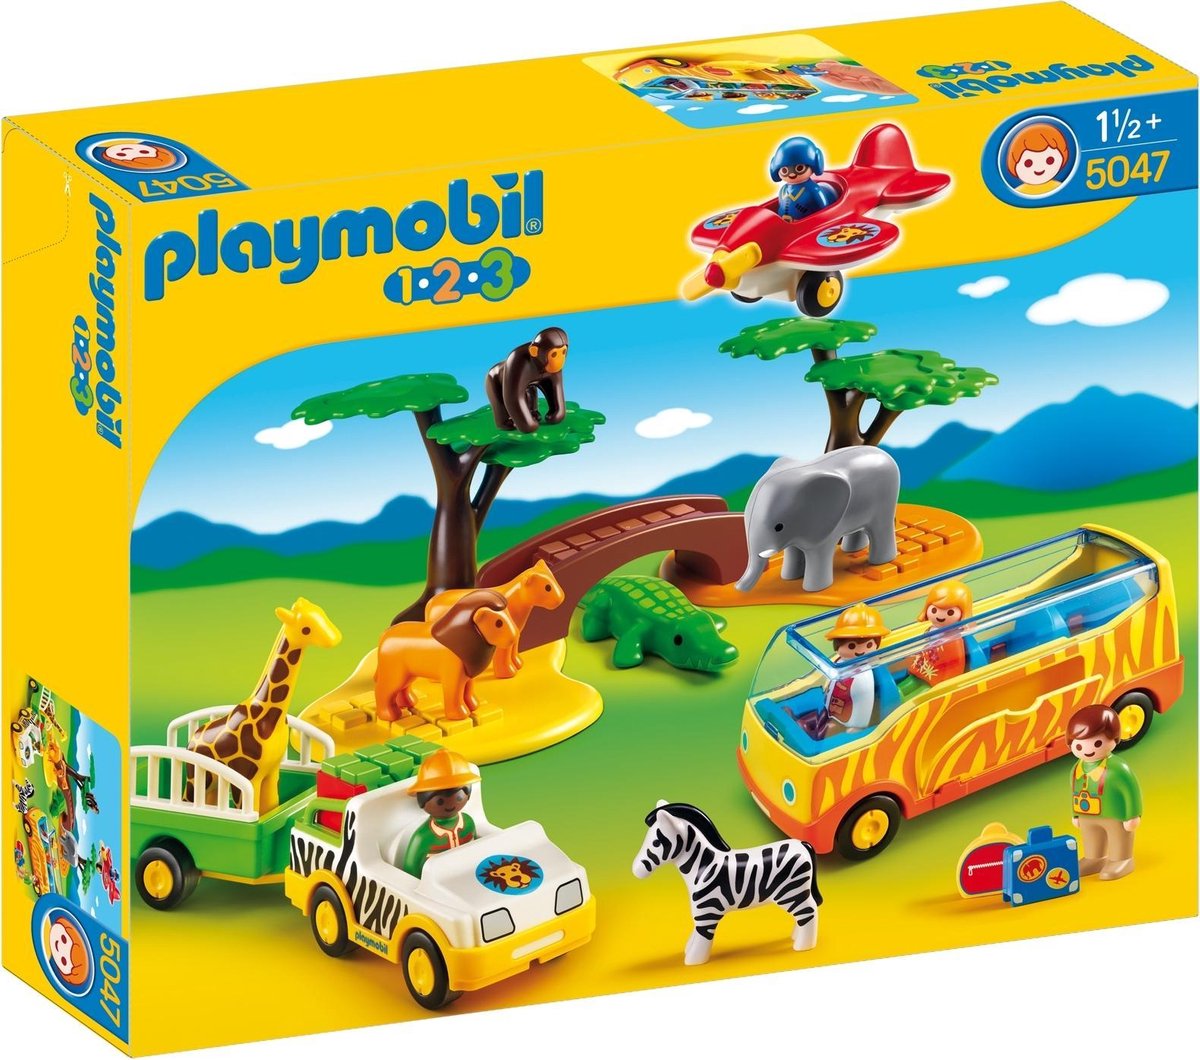 Playmobil 5047 Safari Set on Sale, SAVE 47% - mpgc.net